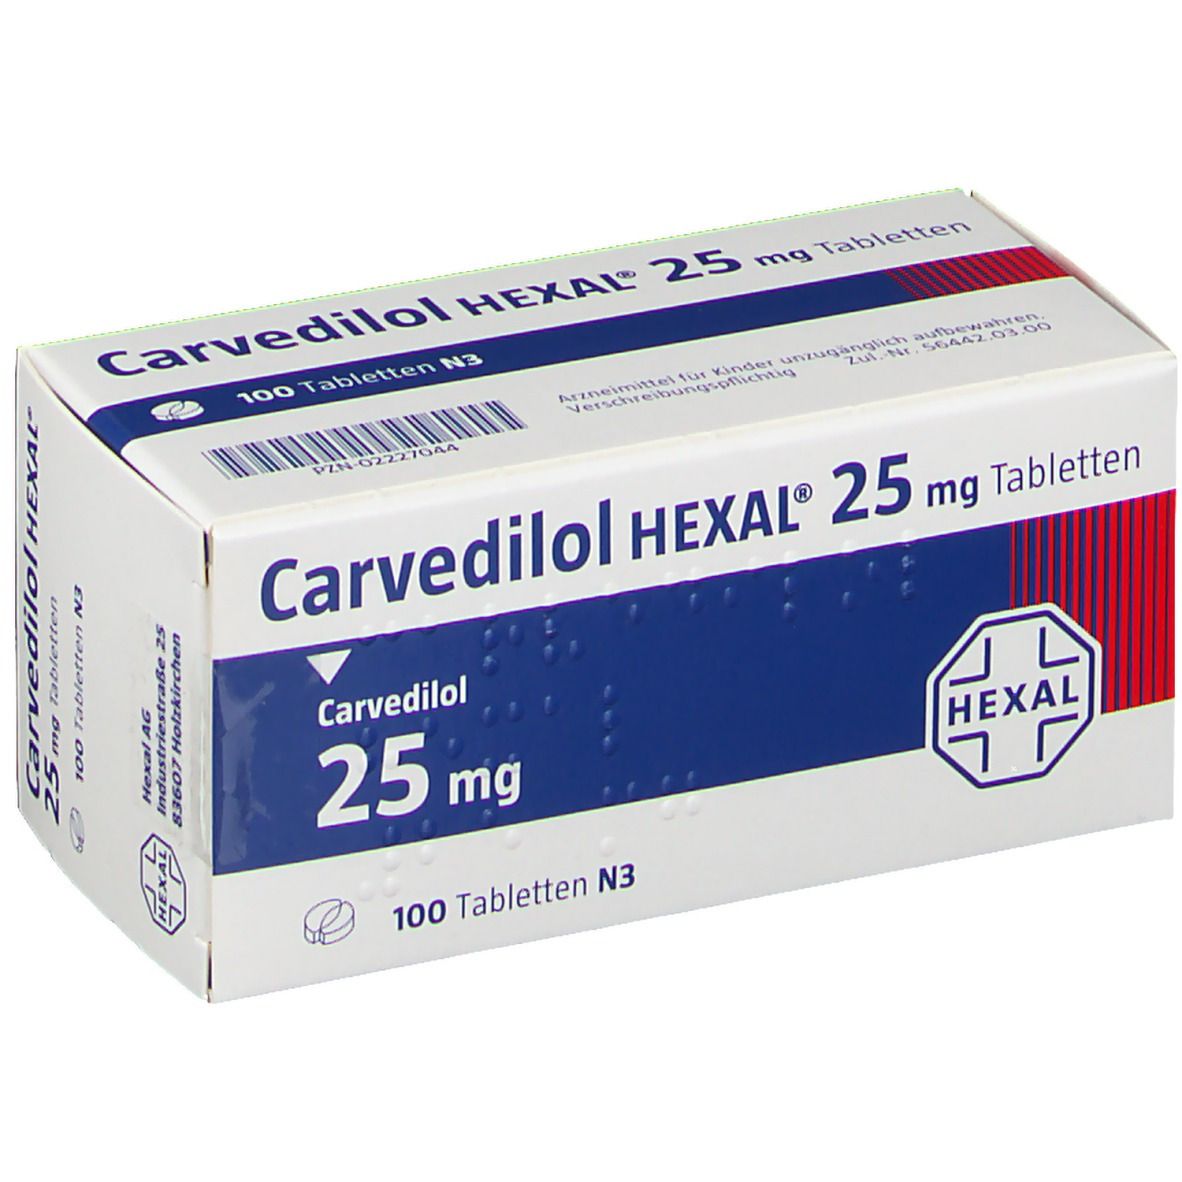 Carvedilol HEXAL® 25 mg